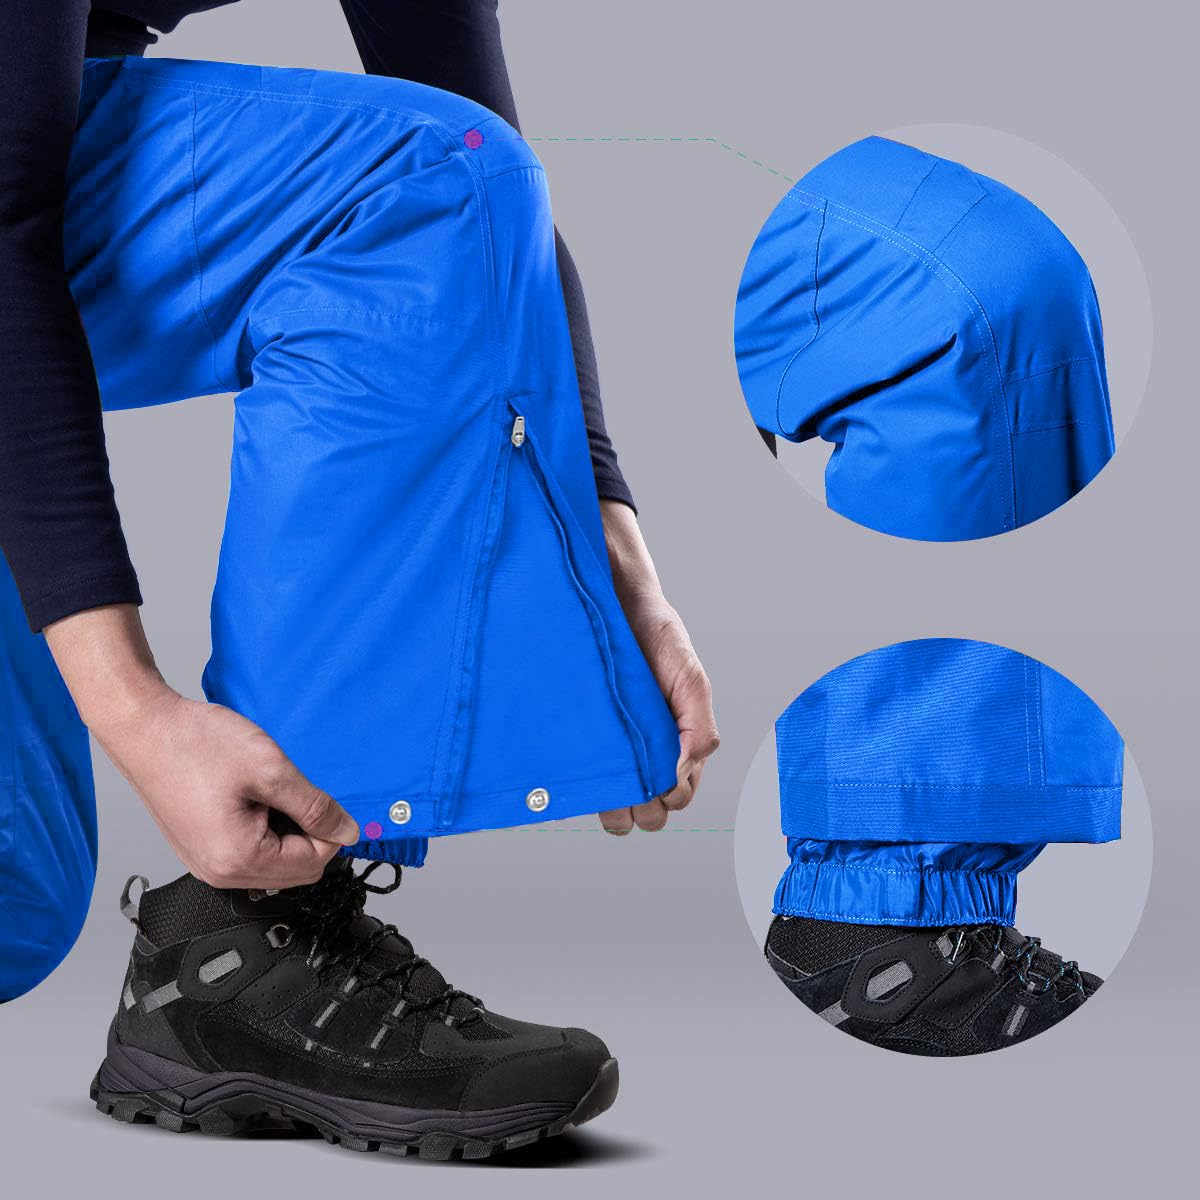 Men's Waterproof Ski Insulated Pants